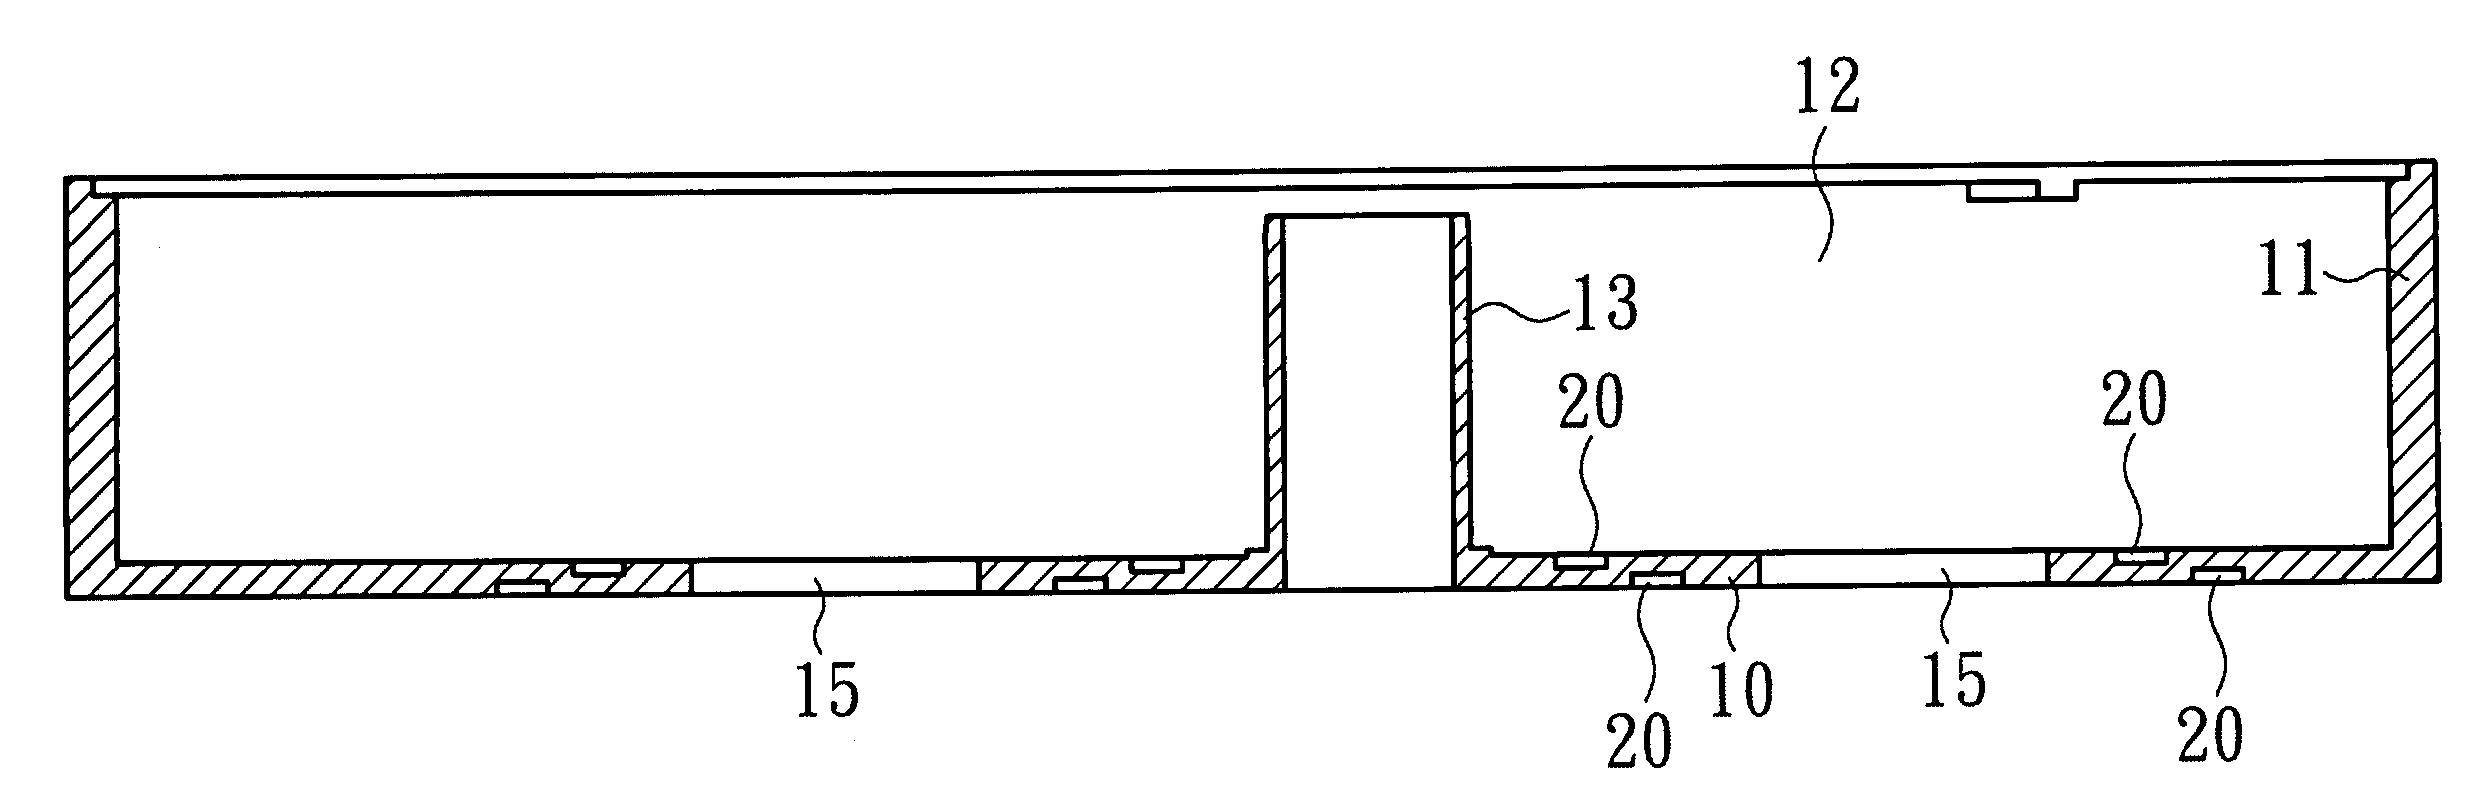 Base design of cooling structure